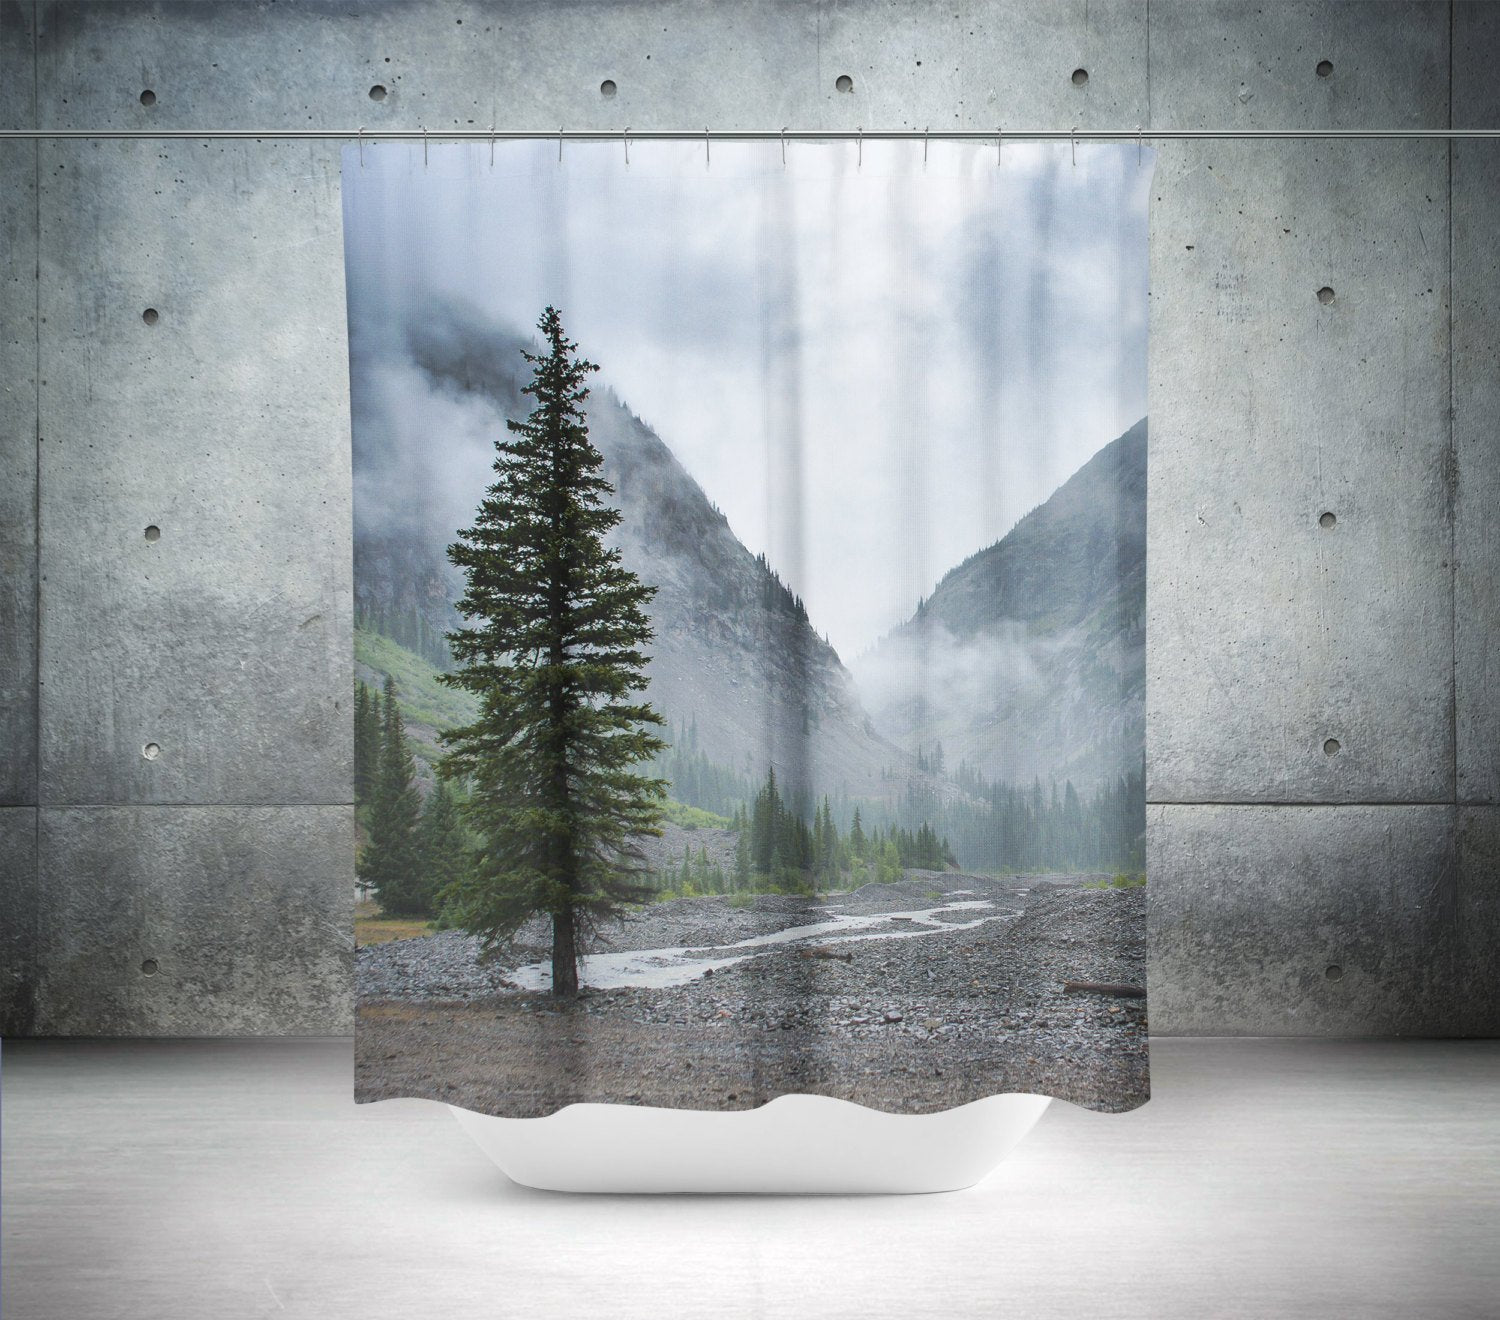 Foggy Mountain Range Shower Curtain 71x74 inch Lodge Home -